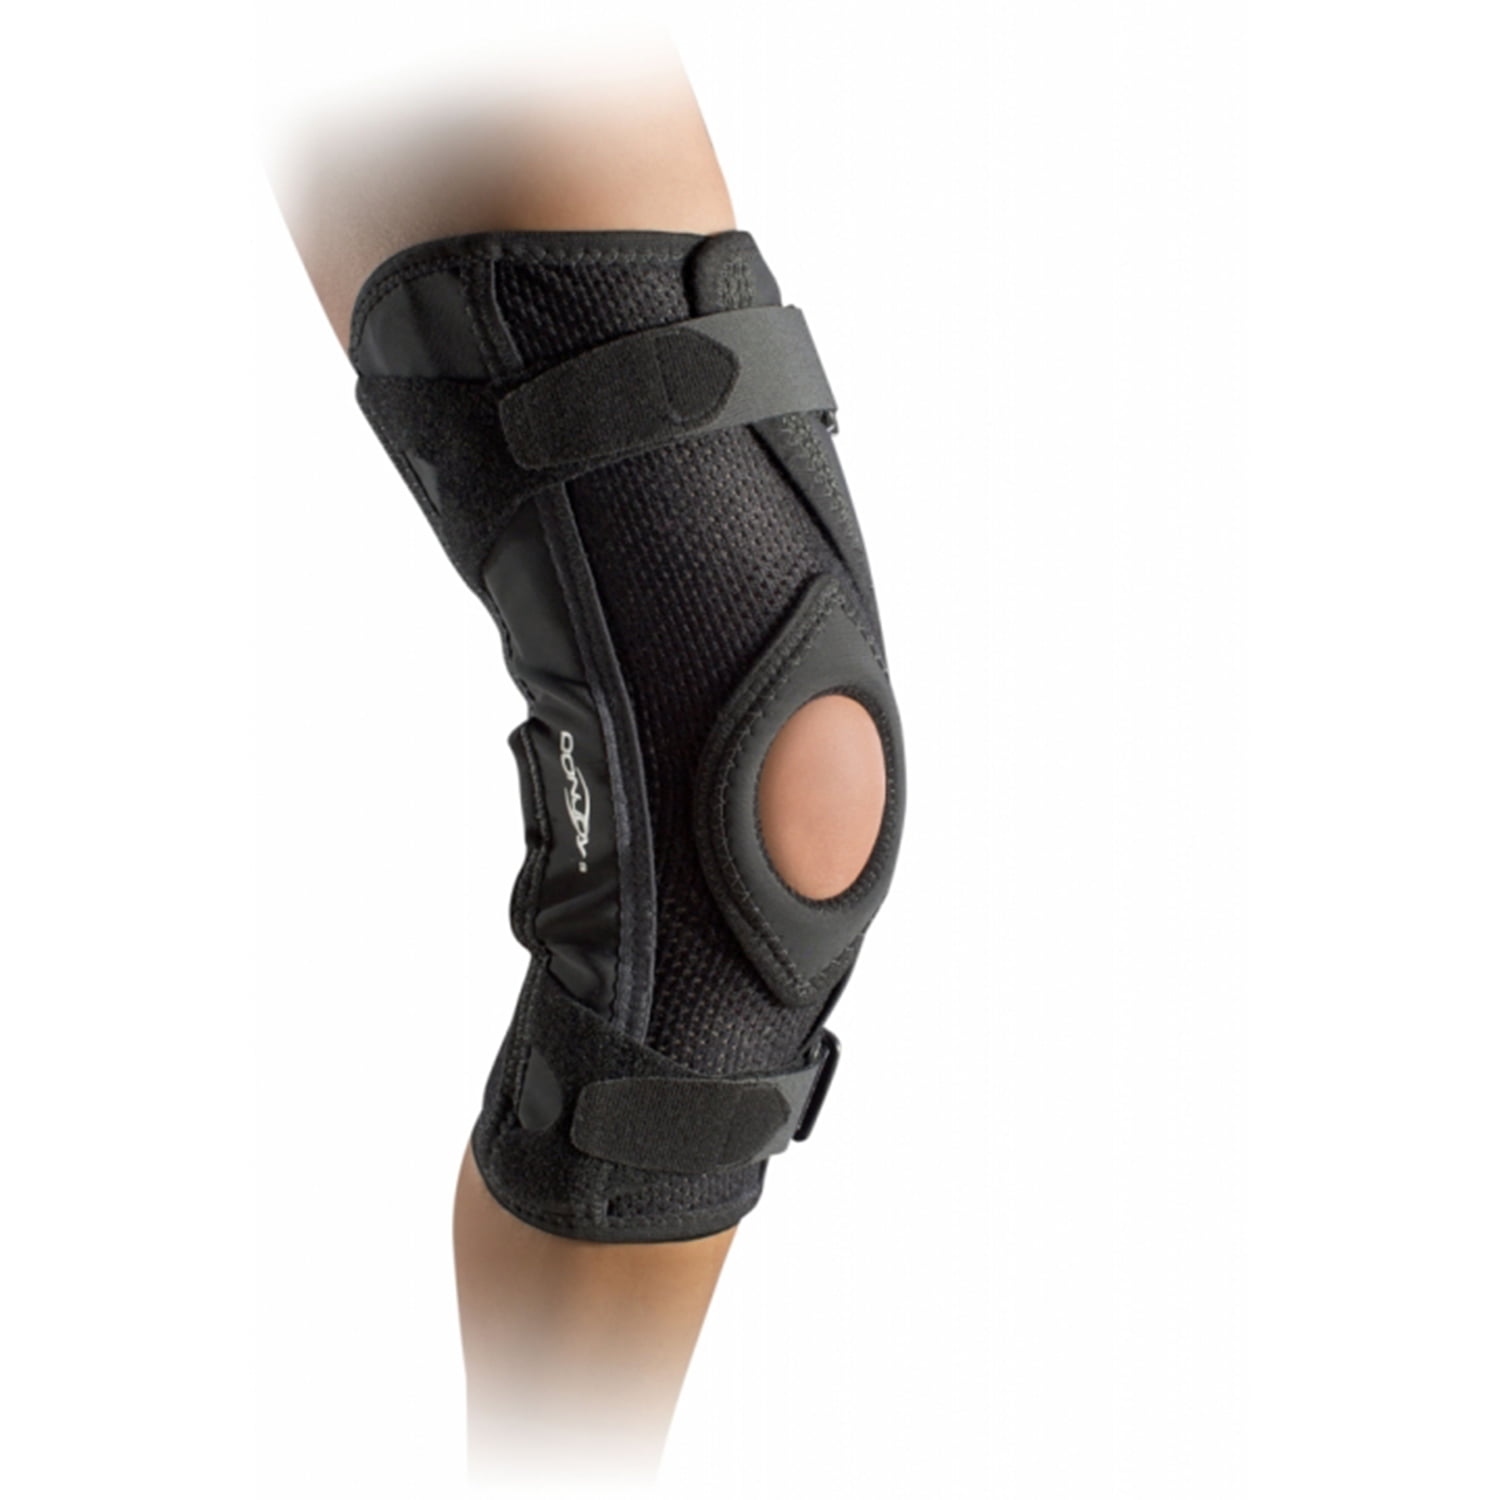 DonJoy OA Lite, Lightweight Knee Brace for Osteoarthritis Relief ...